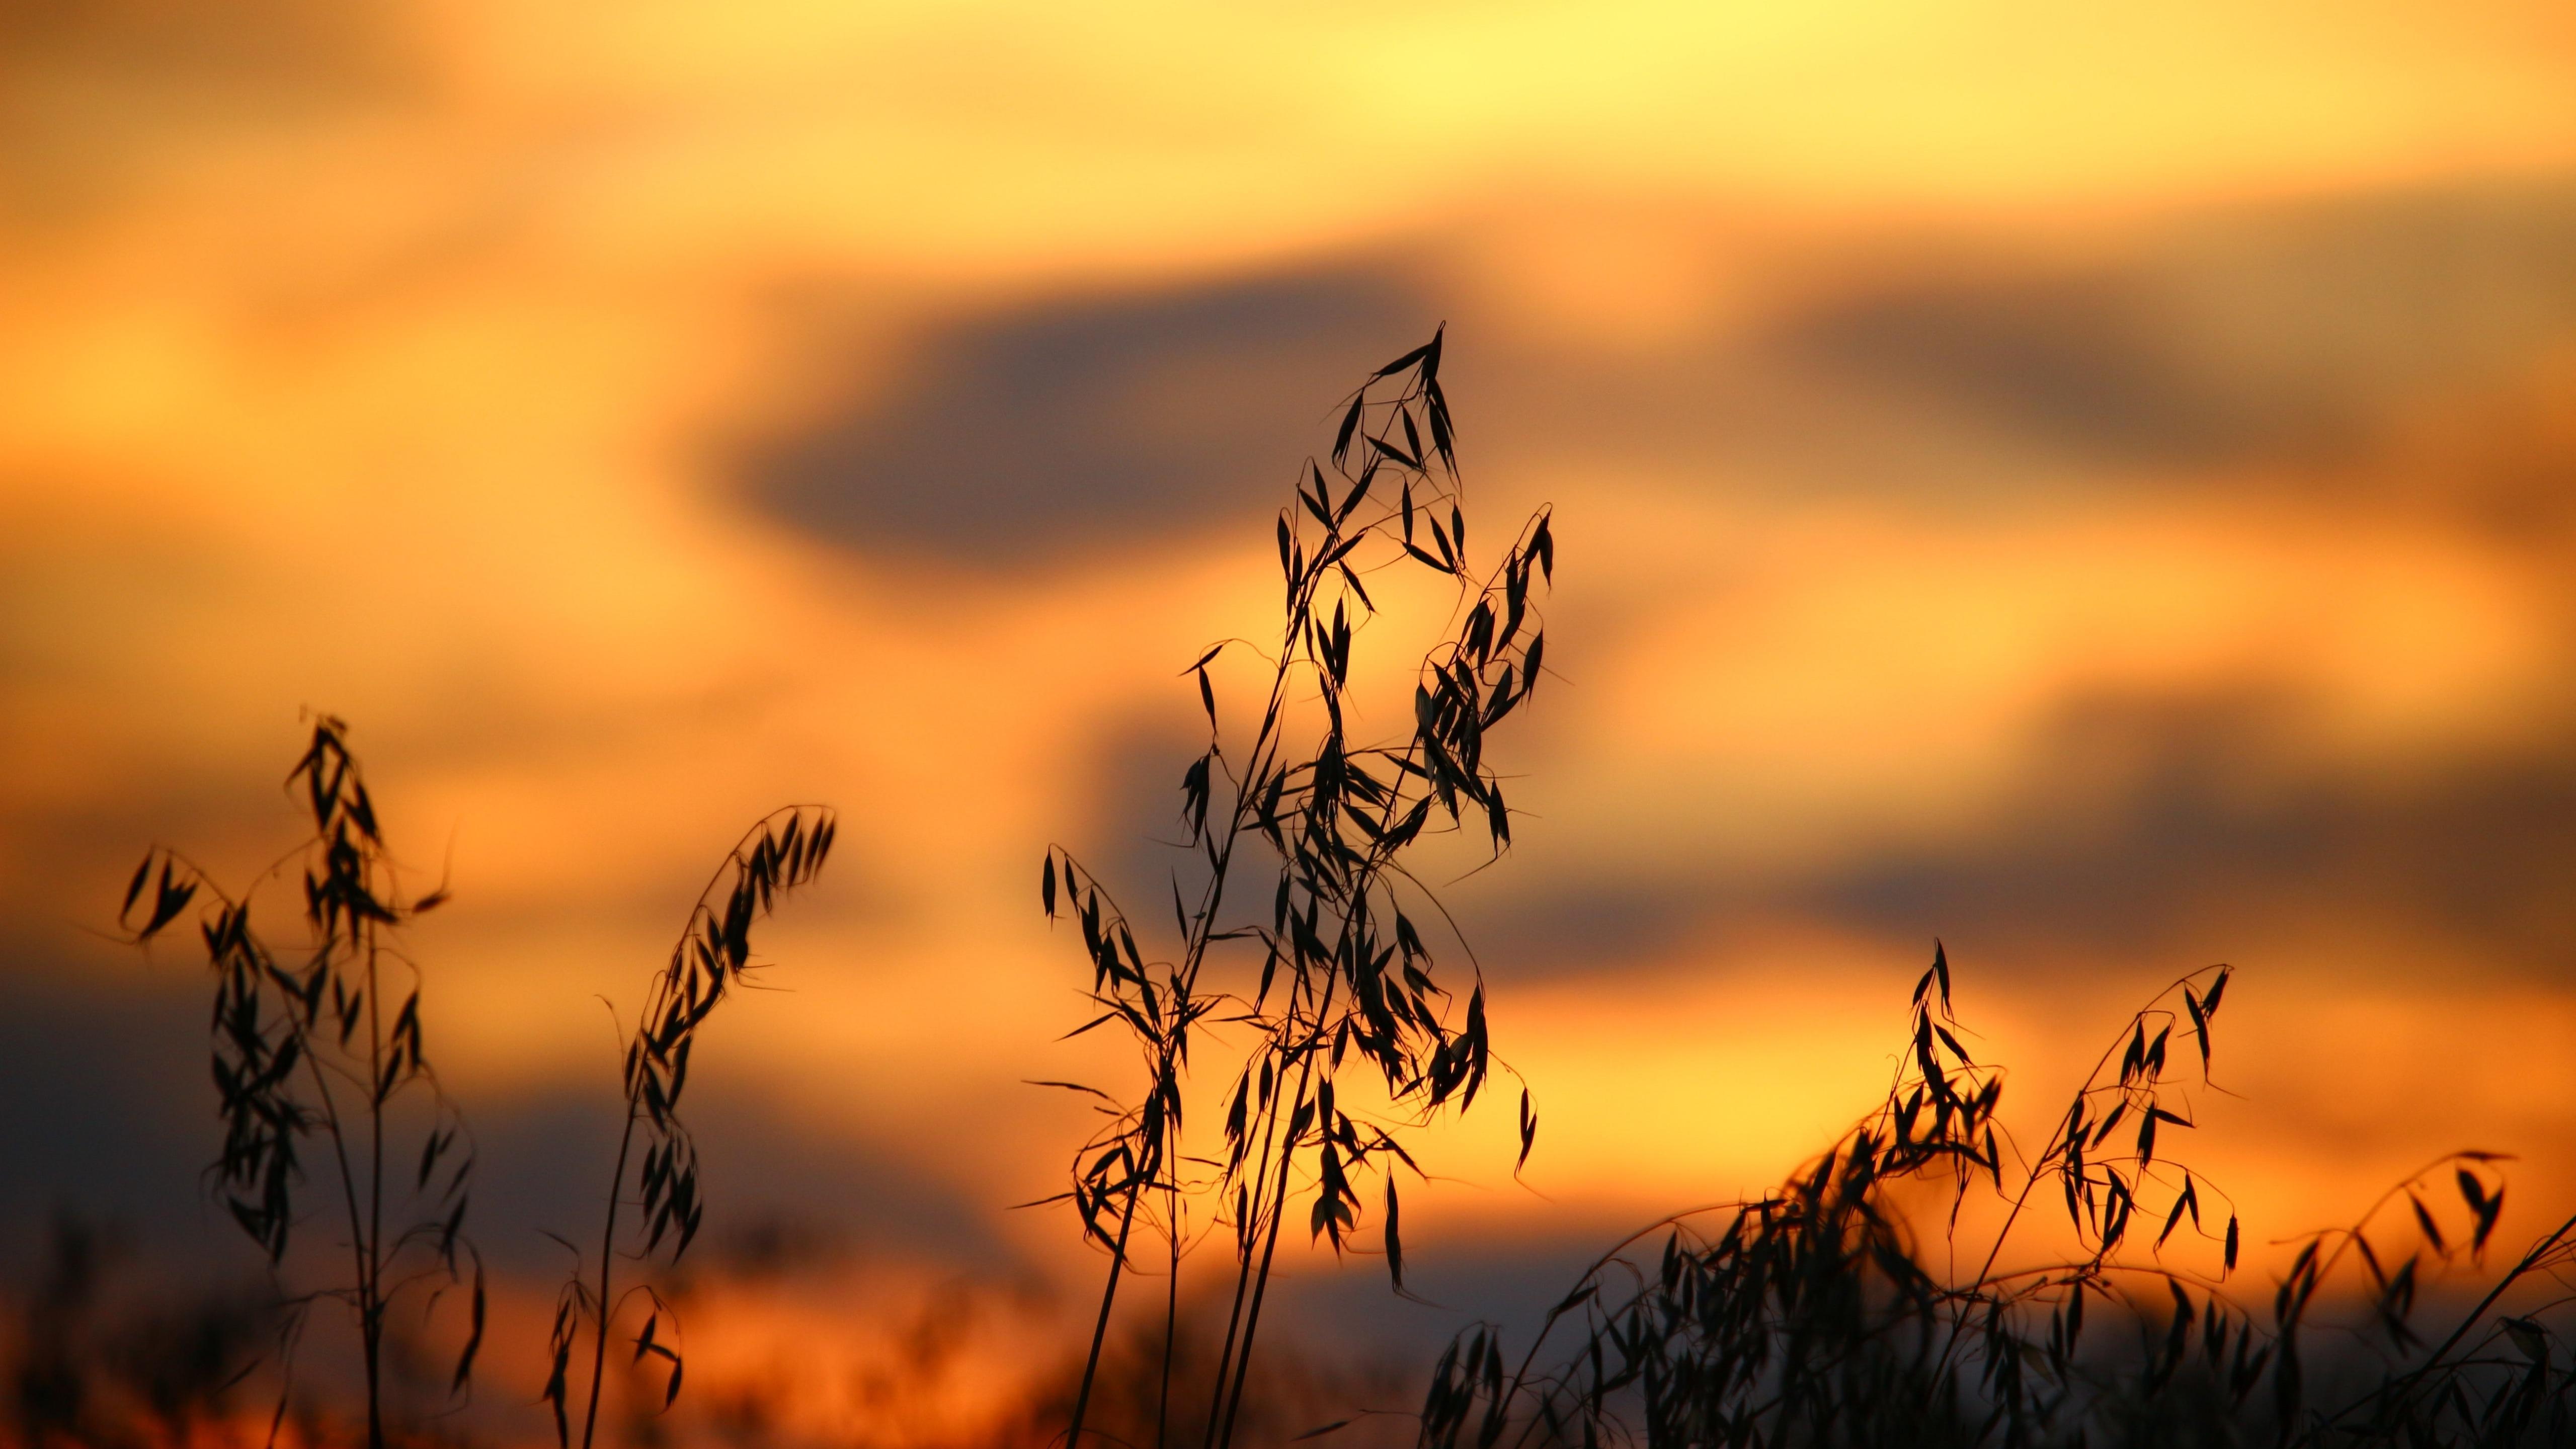 Grass Silhouette In The Sunset 5K UltraHD Wallpaper